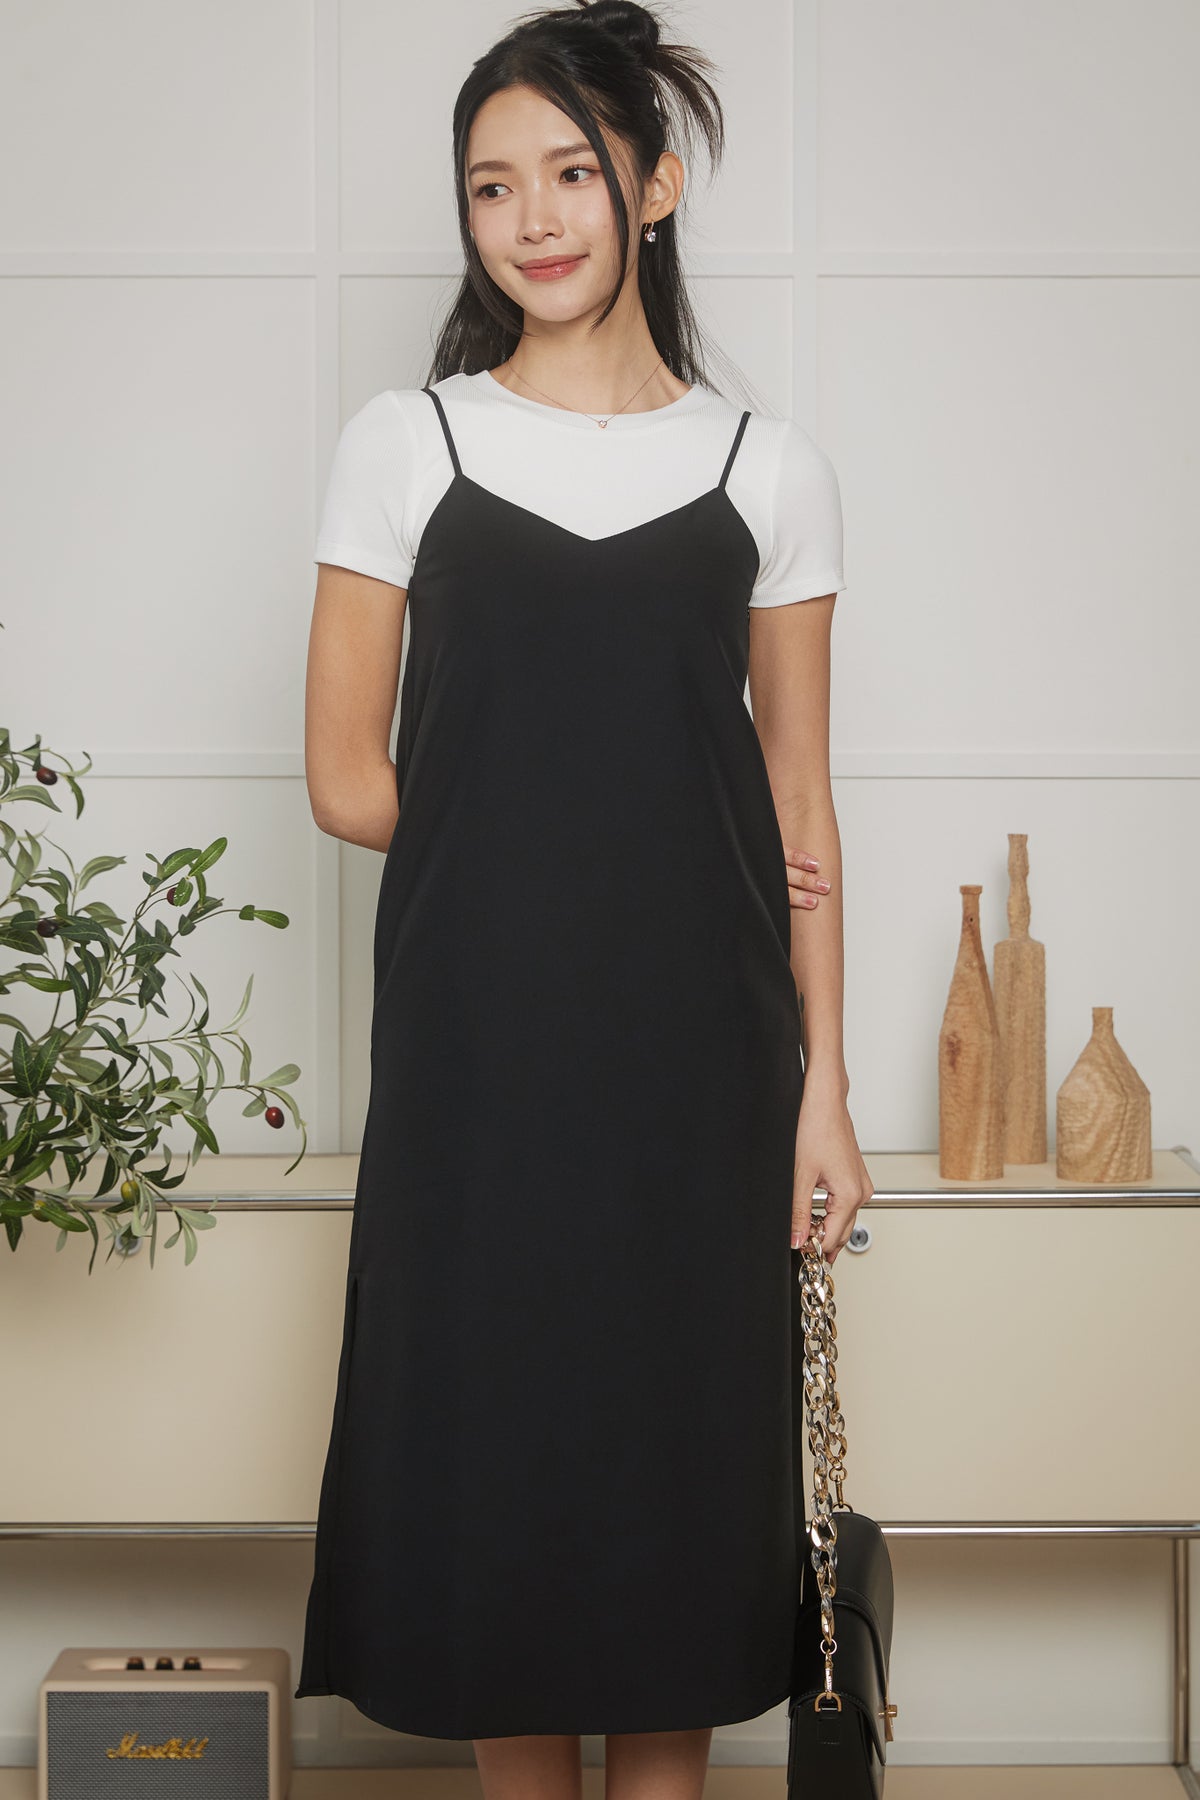 Two-Way Side Slits Strappy Dress in Black